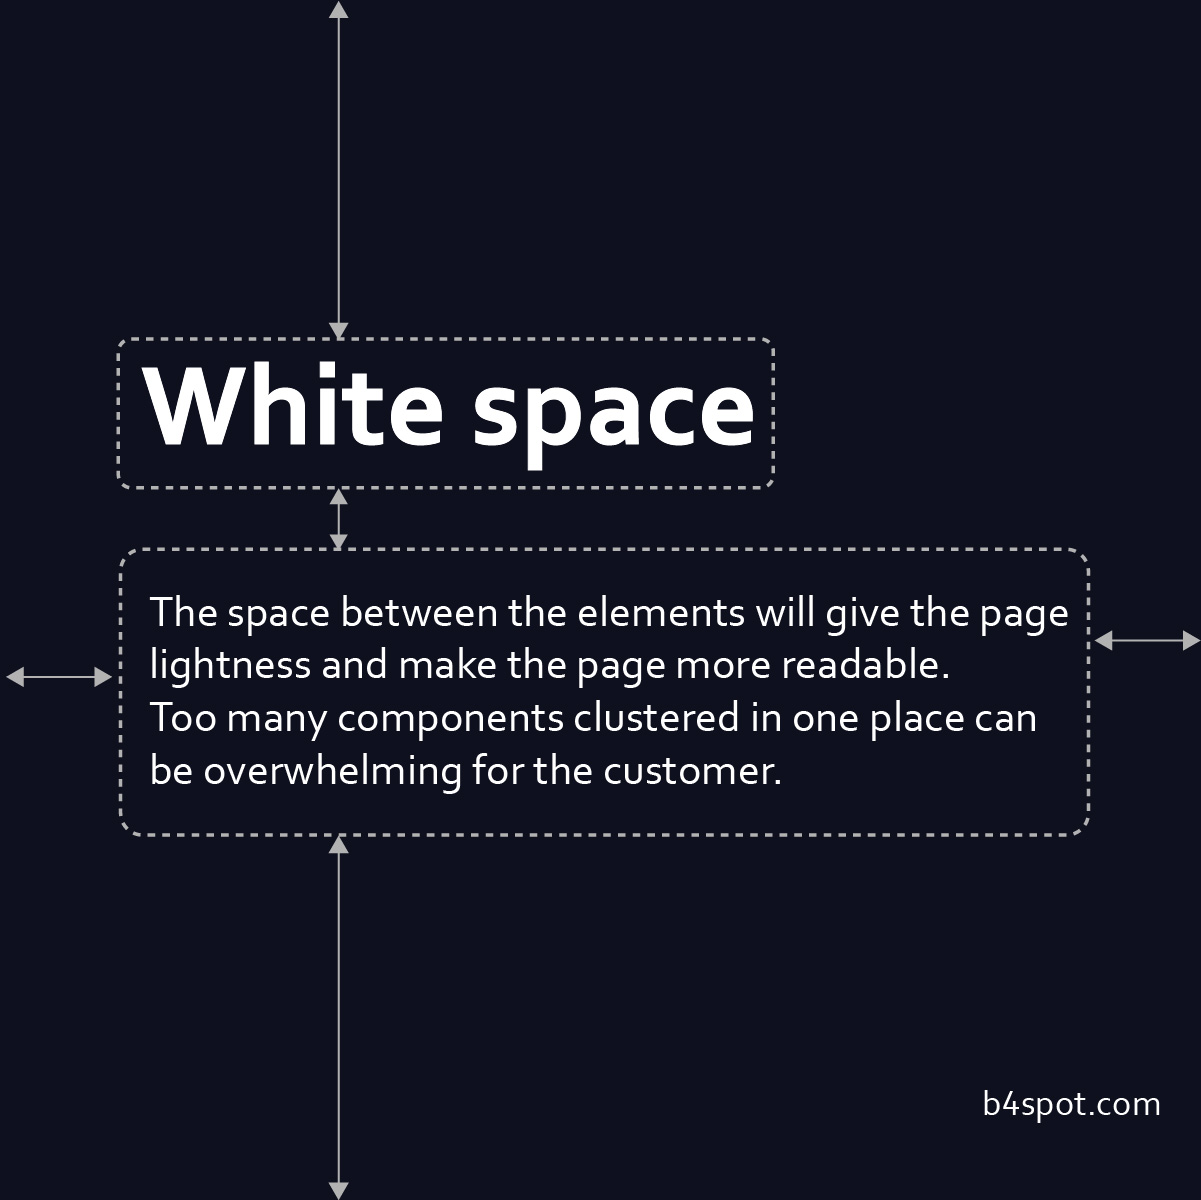 UX friendly - white space